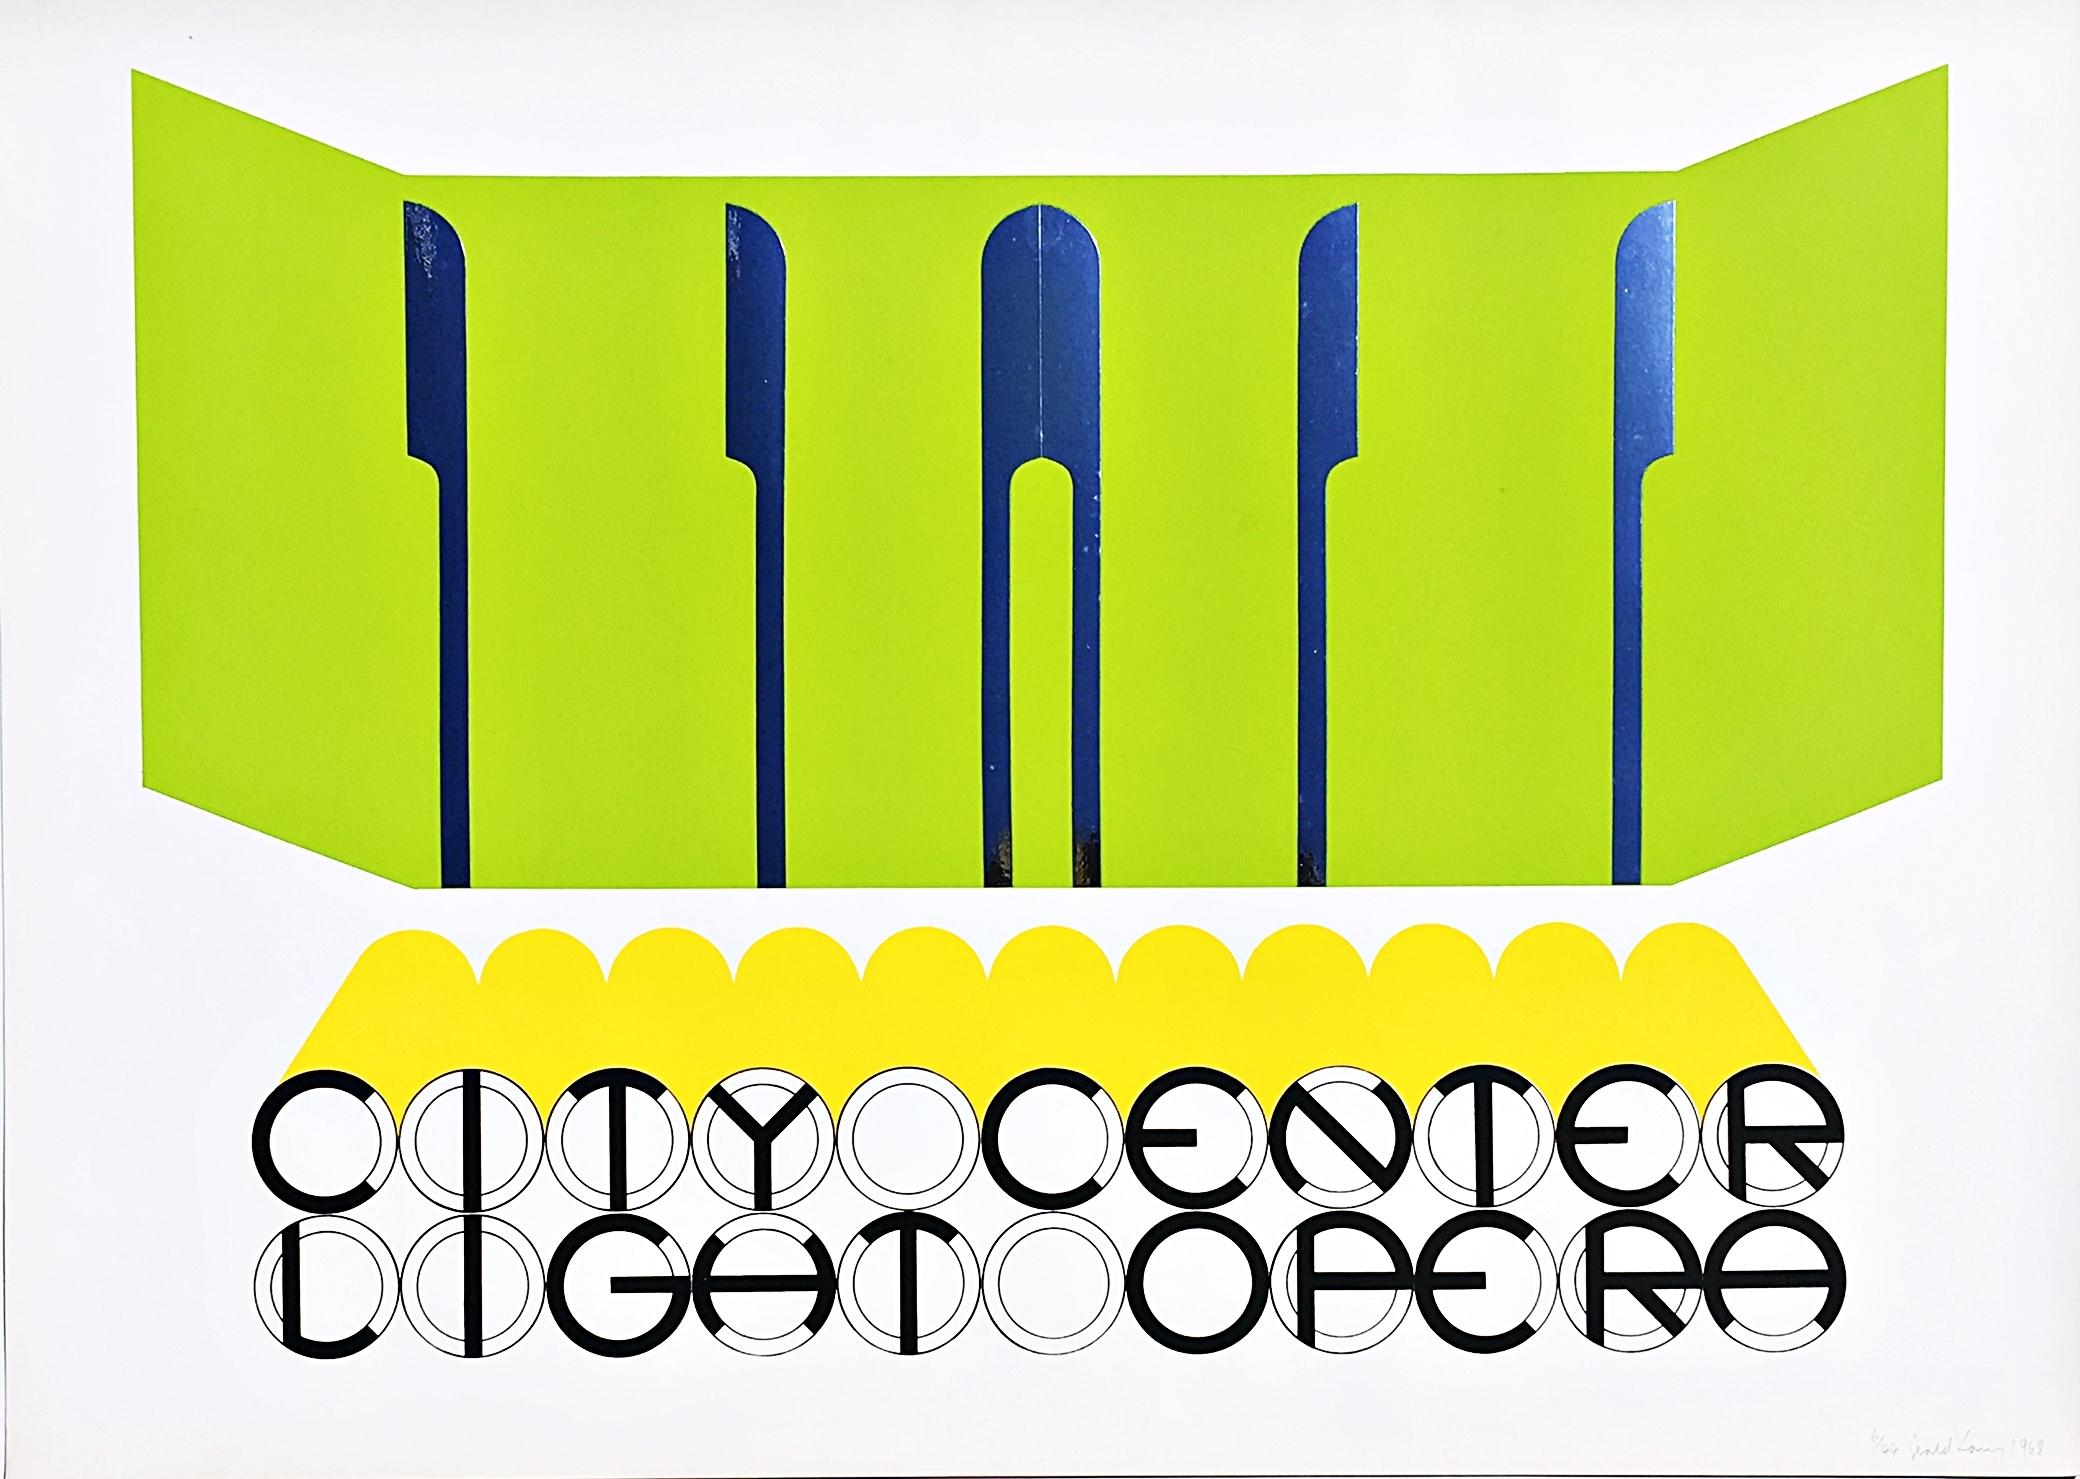 City Center Light Opera - Mixed Media Art by Gerald Laing